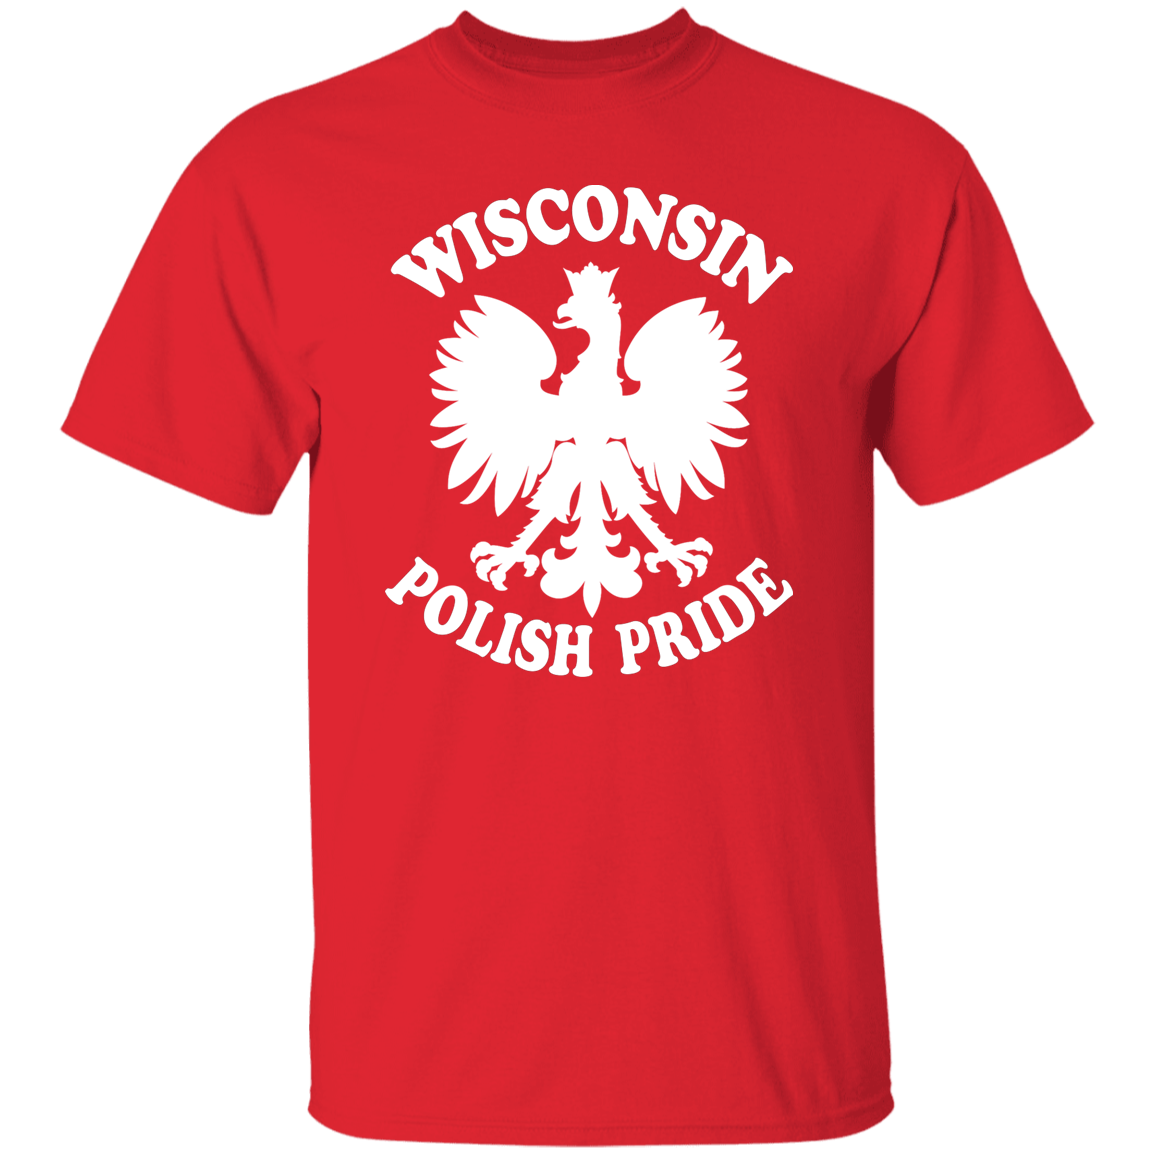 Wisconsin Polish Pride Apparel CustomCat G500 5.3 oz. T-Shirt Red S